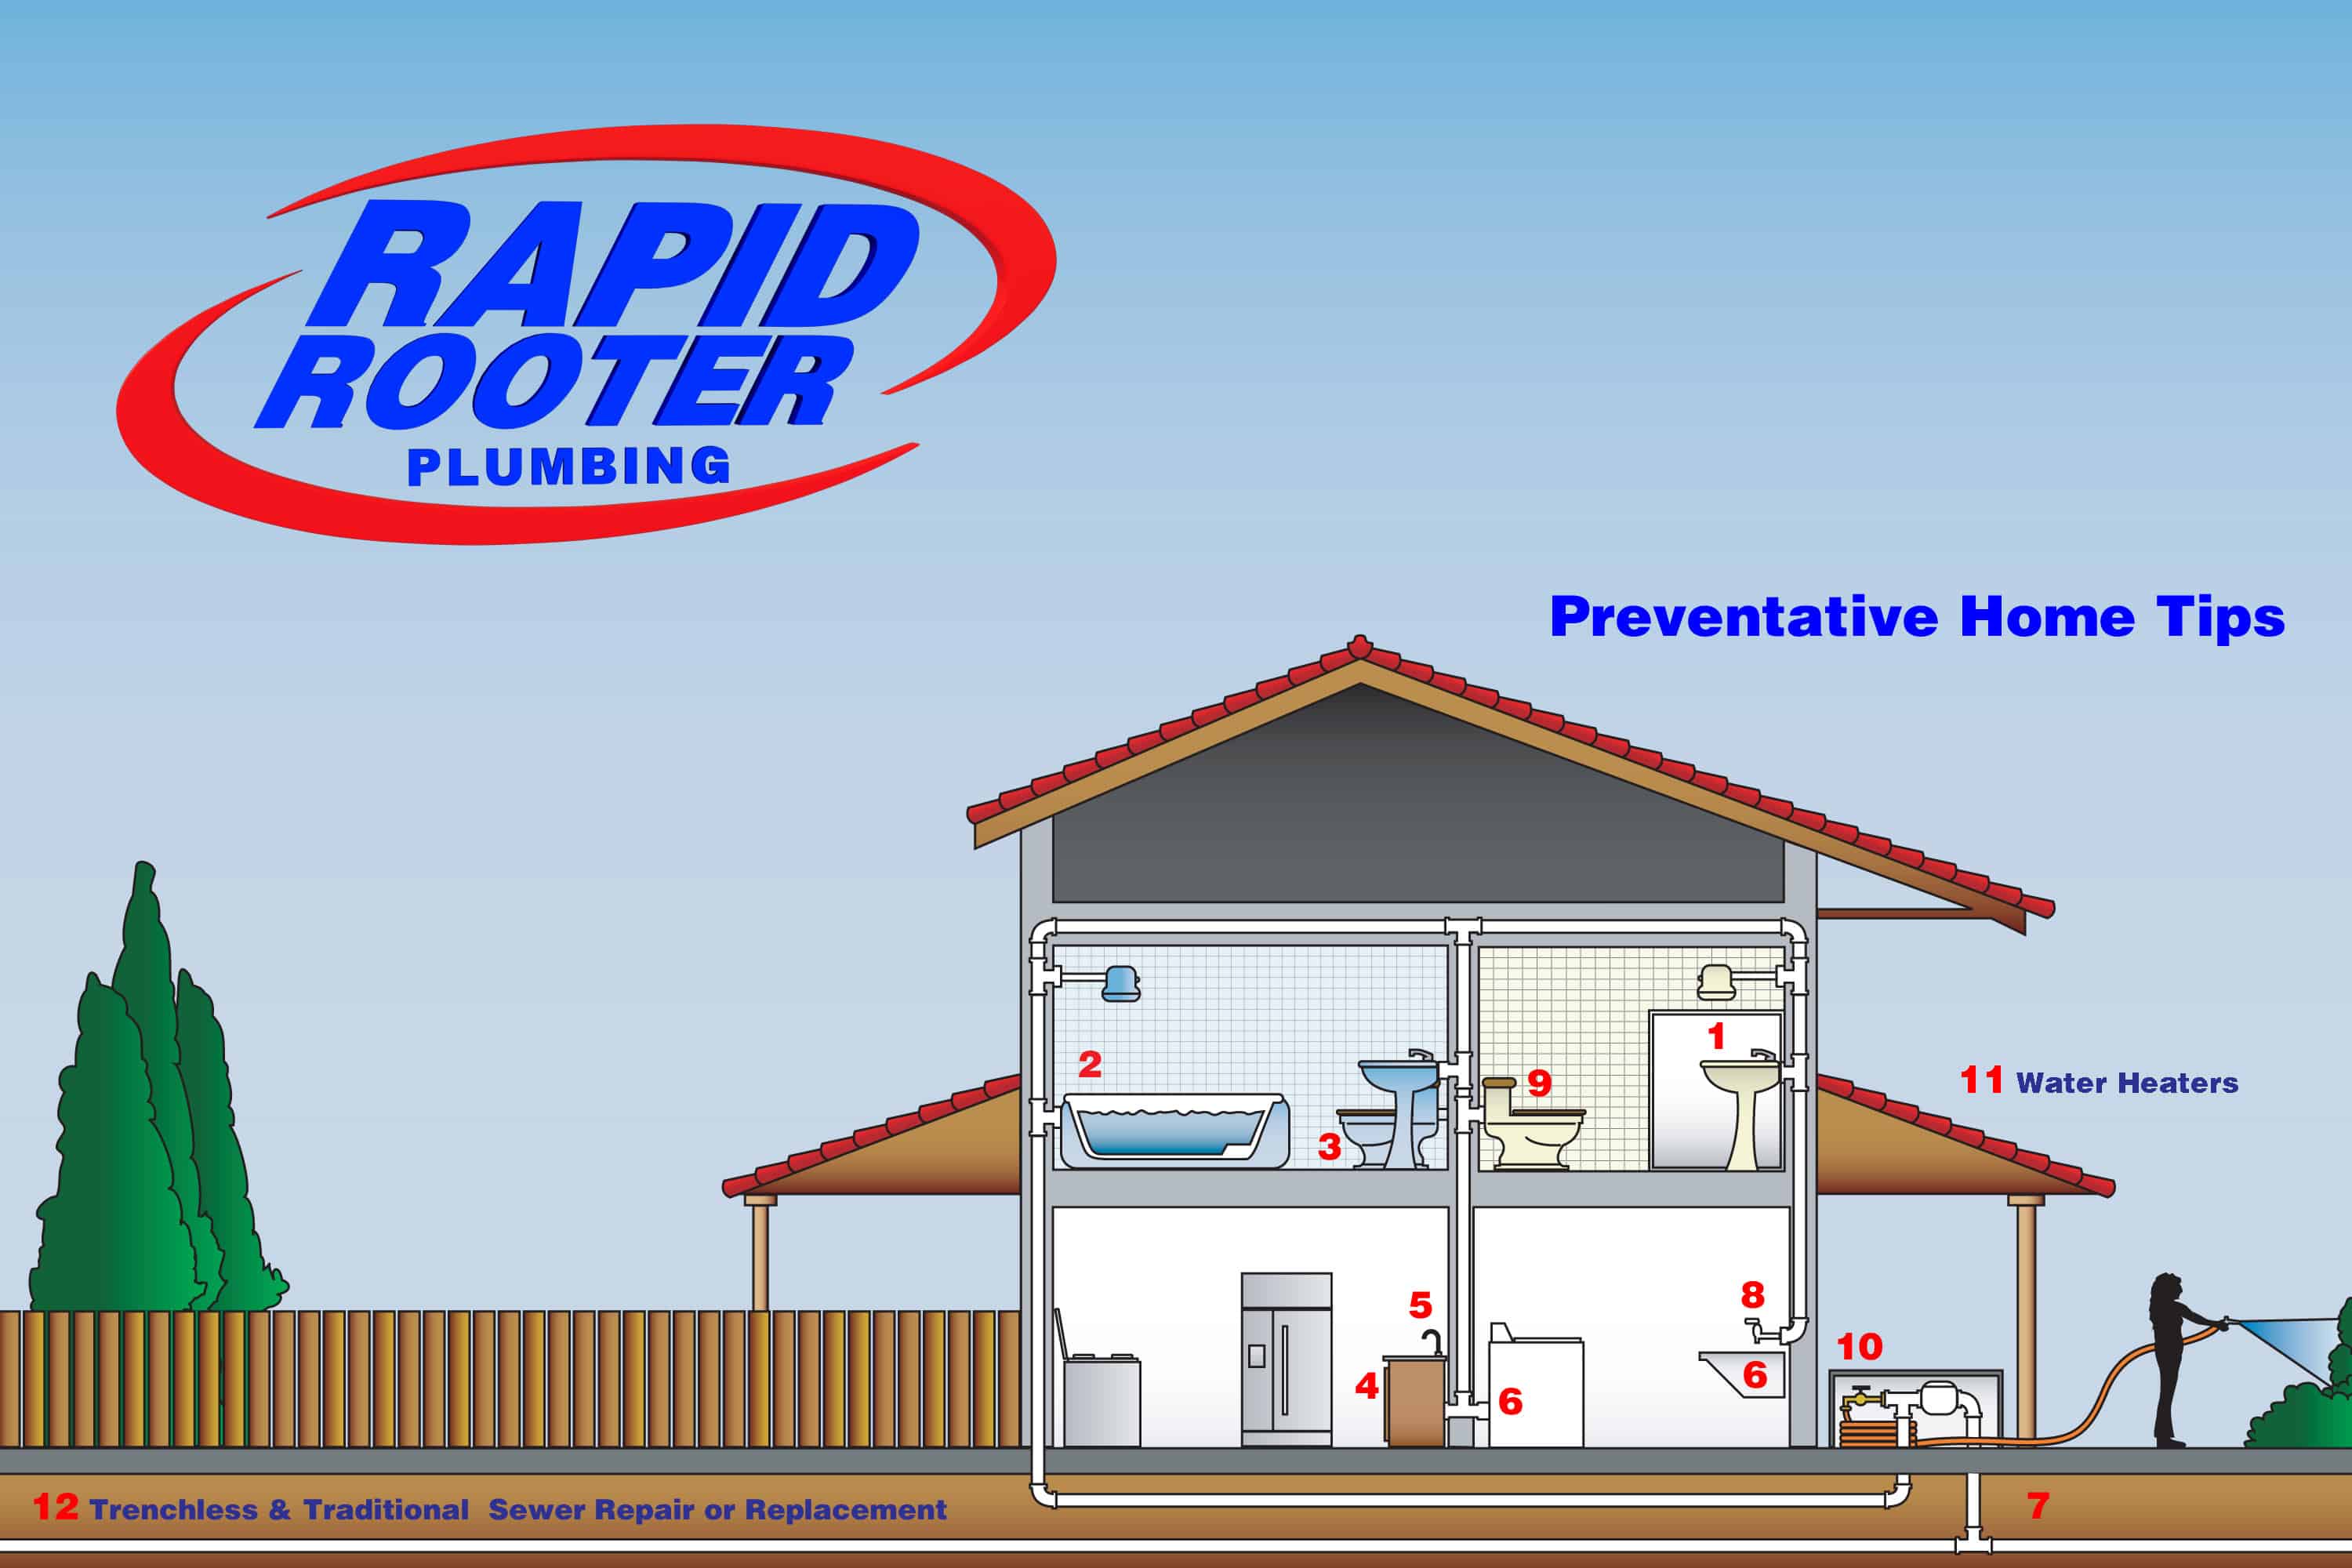 Rapid-Rooter-Plumbing-preventative-home-tips